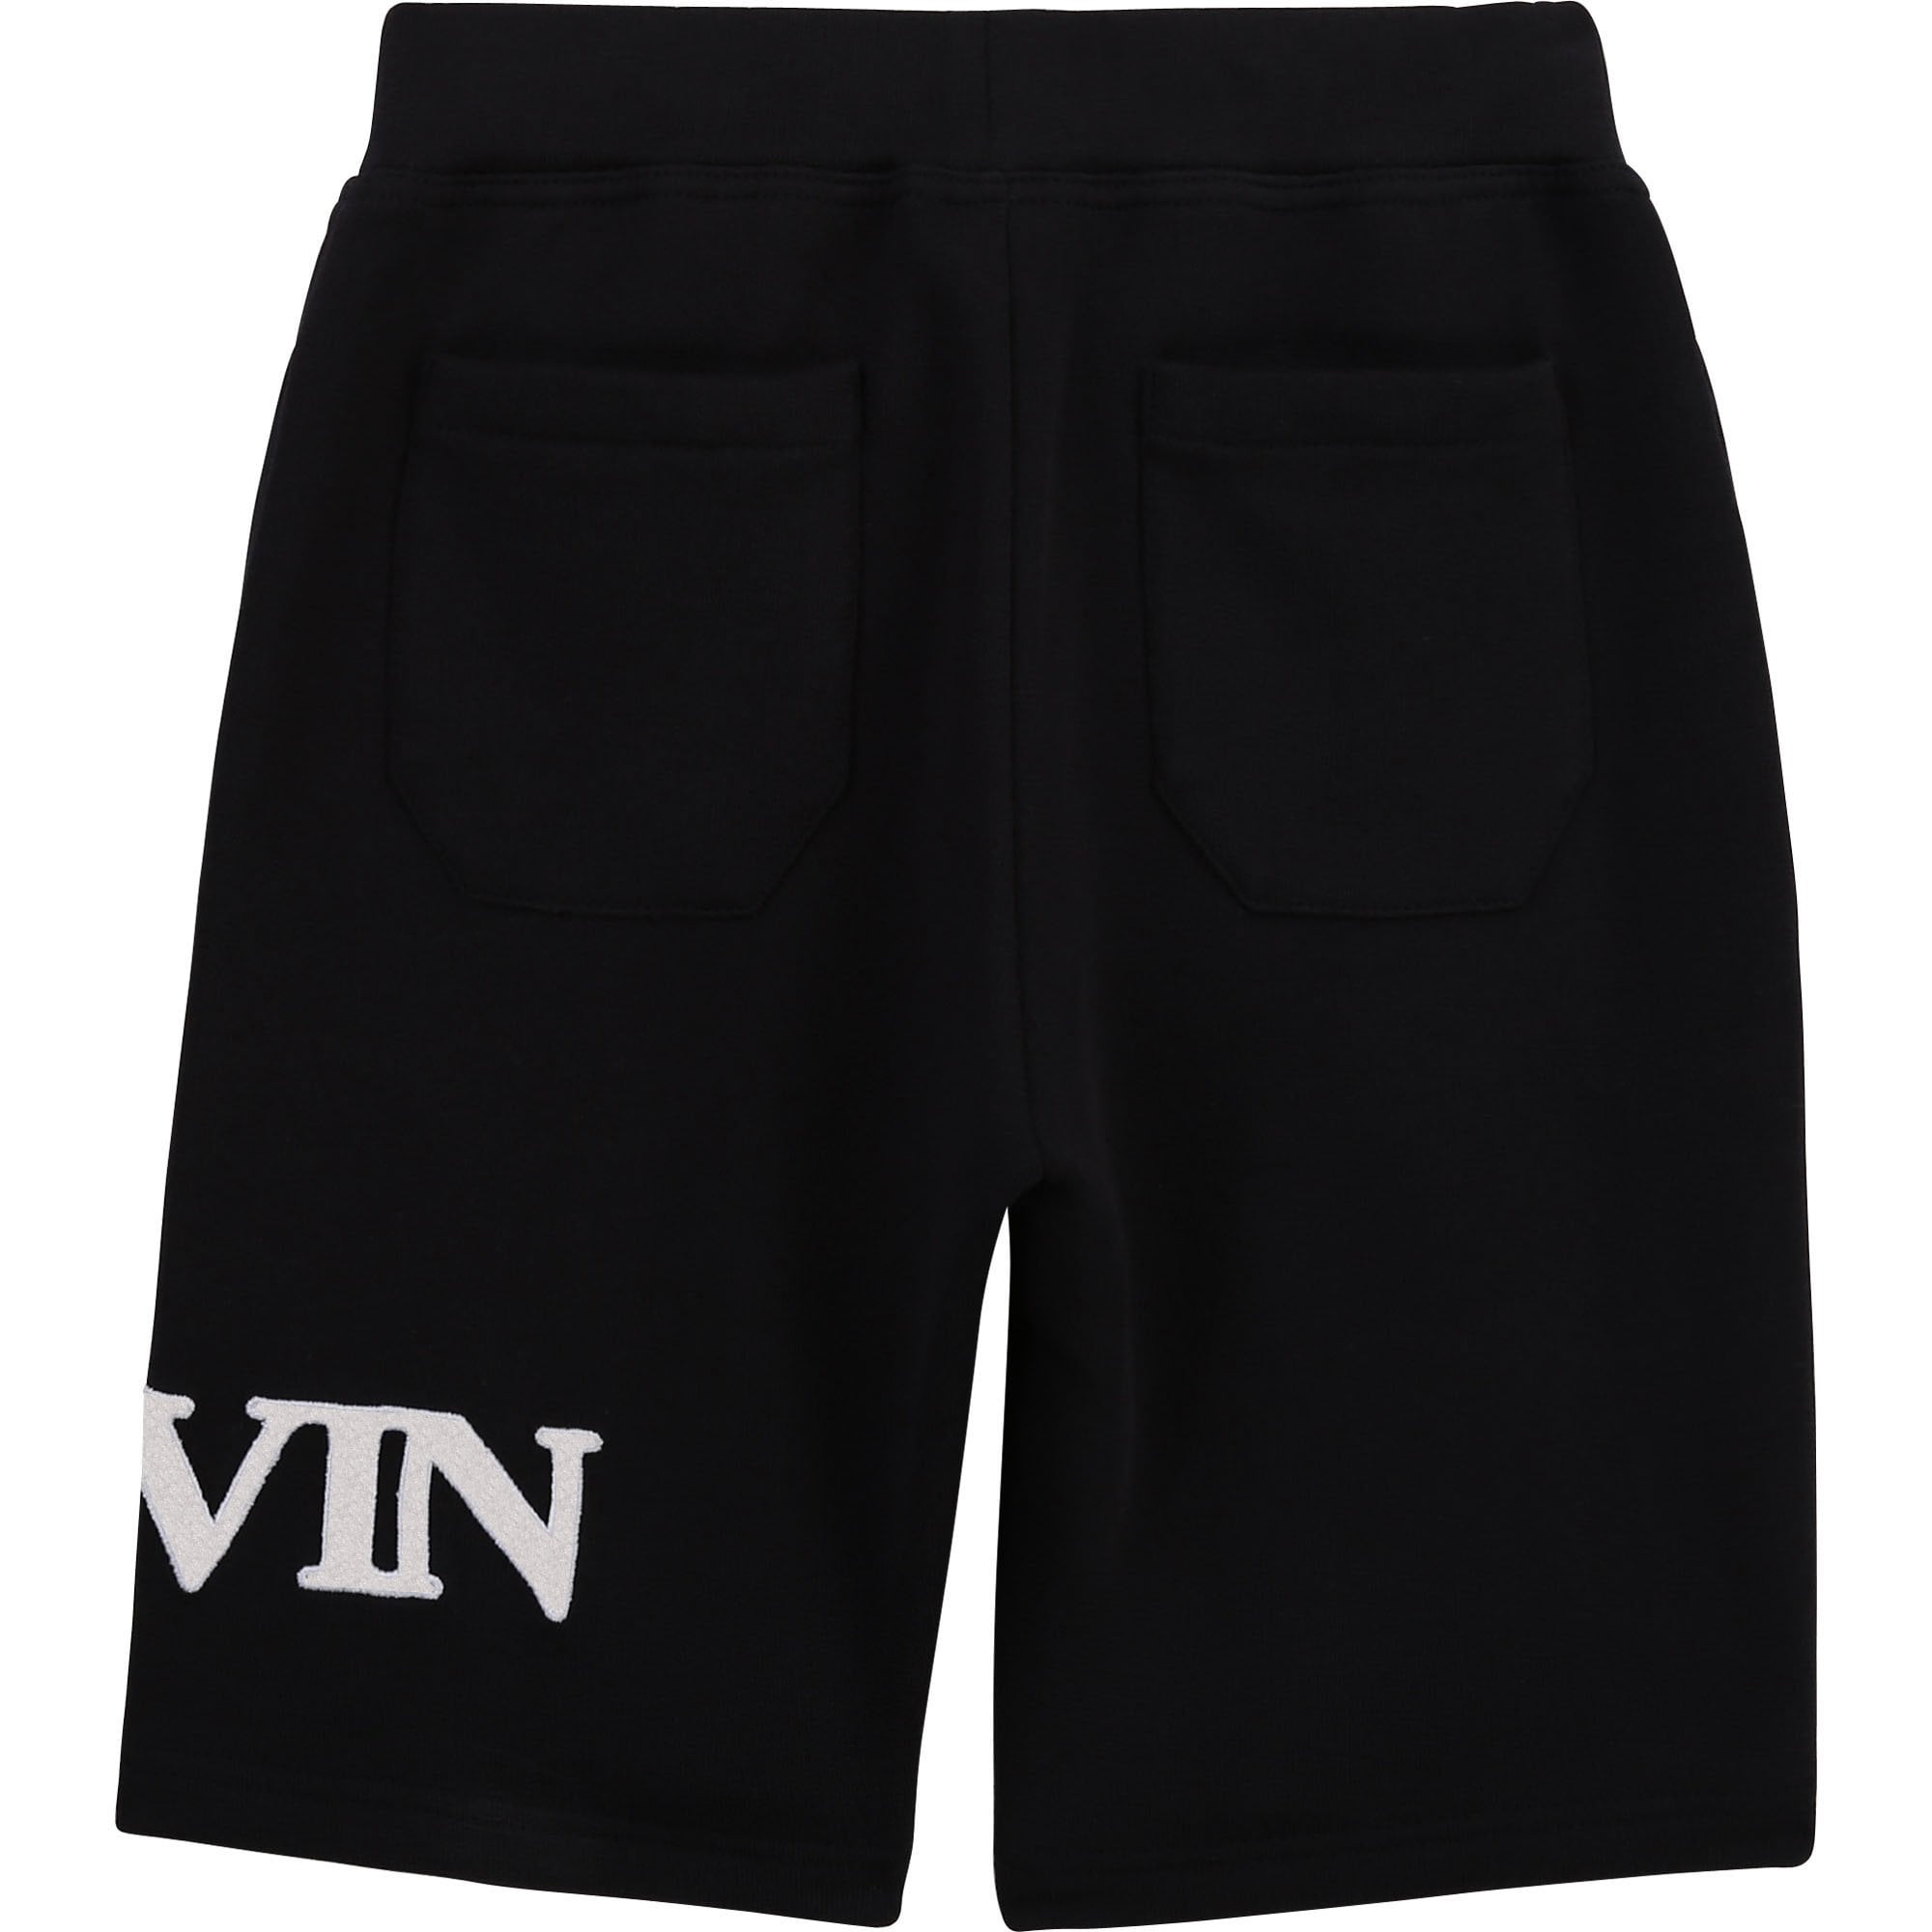 Lanvin Boys Logo Shorts Black Navy 14Y